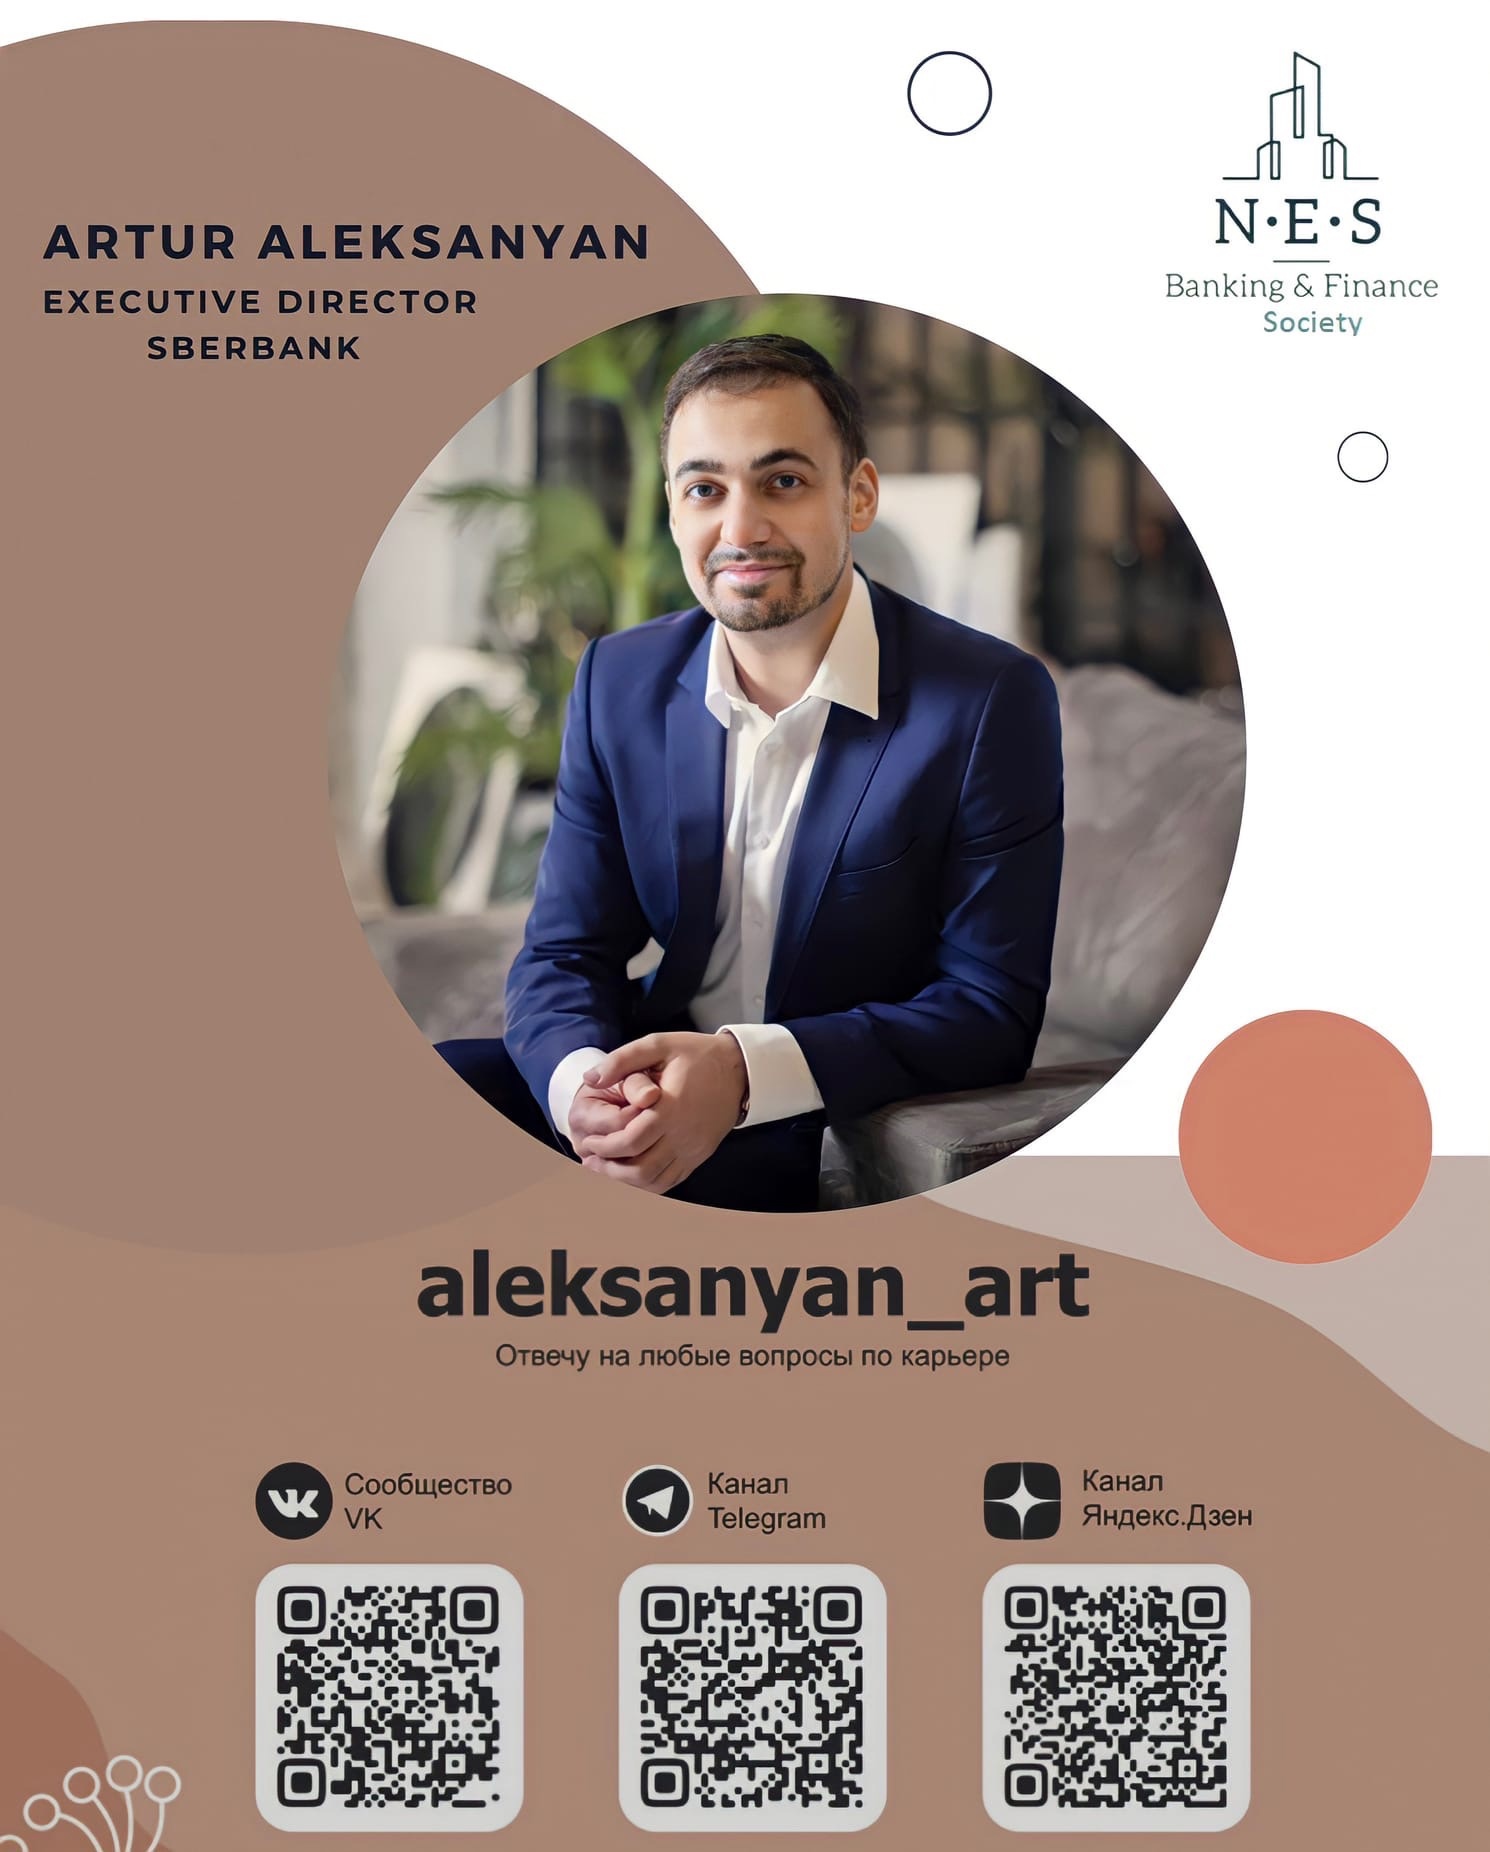 Artur Aleksanyan – the Executive Director of Risk Management at Sberbank